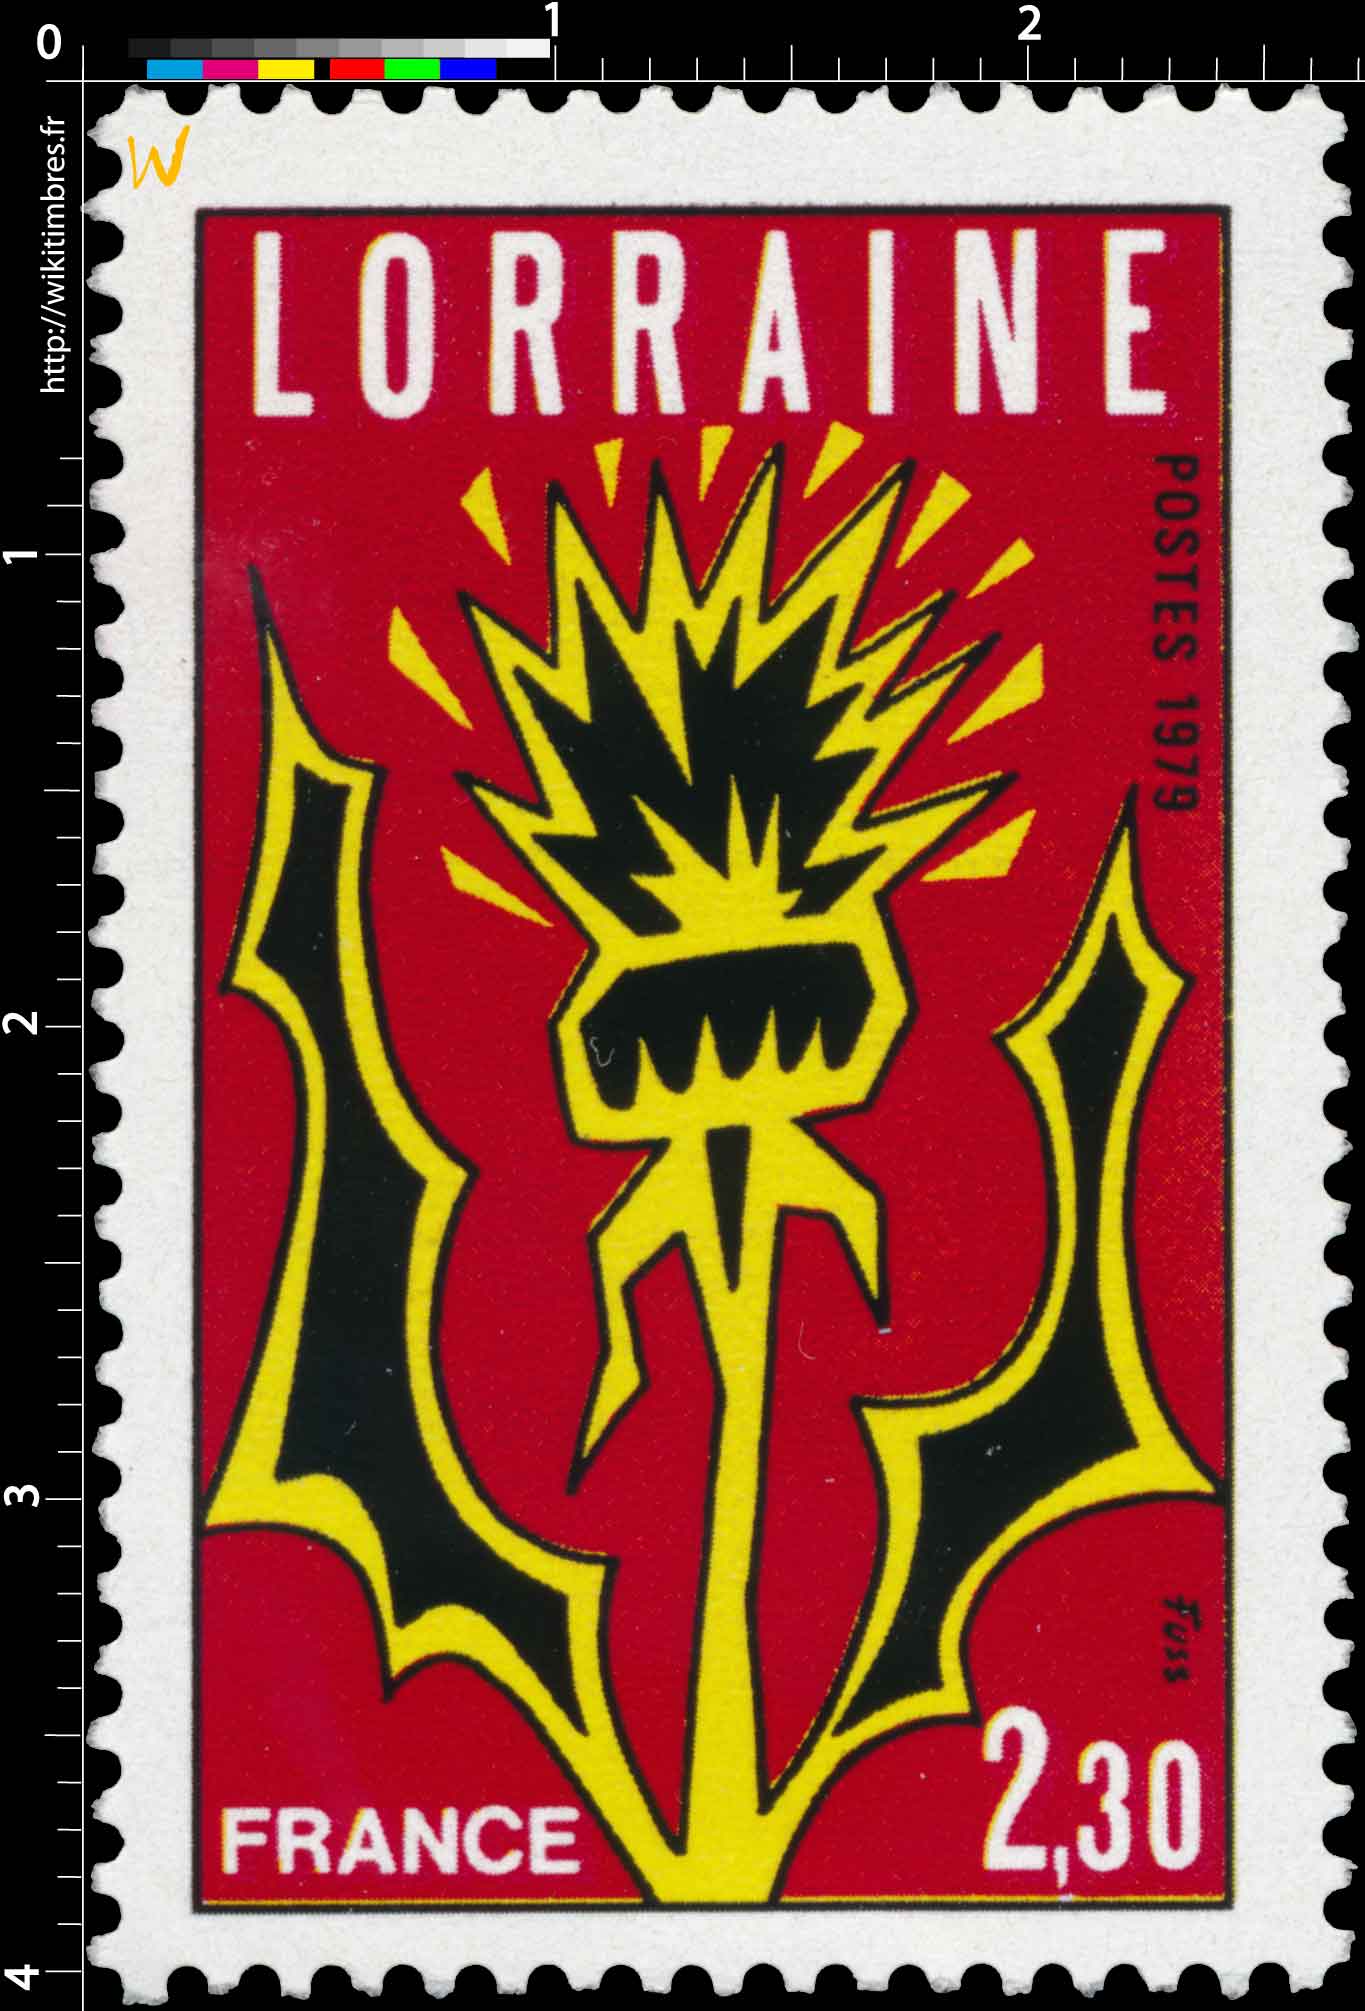 1979 LORRAINE